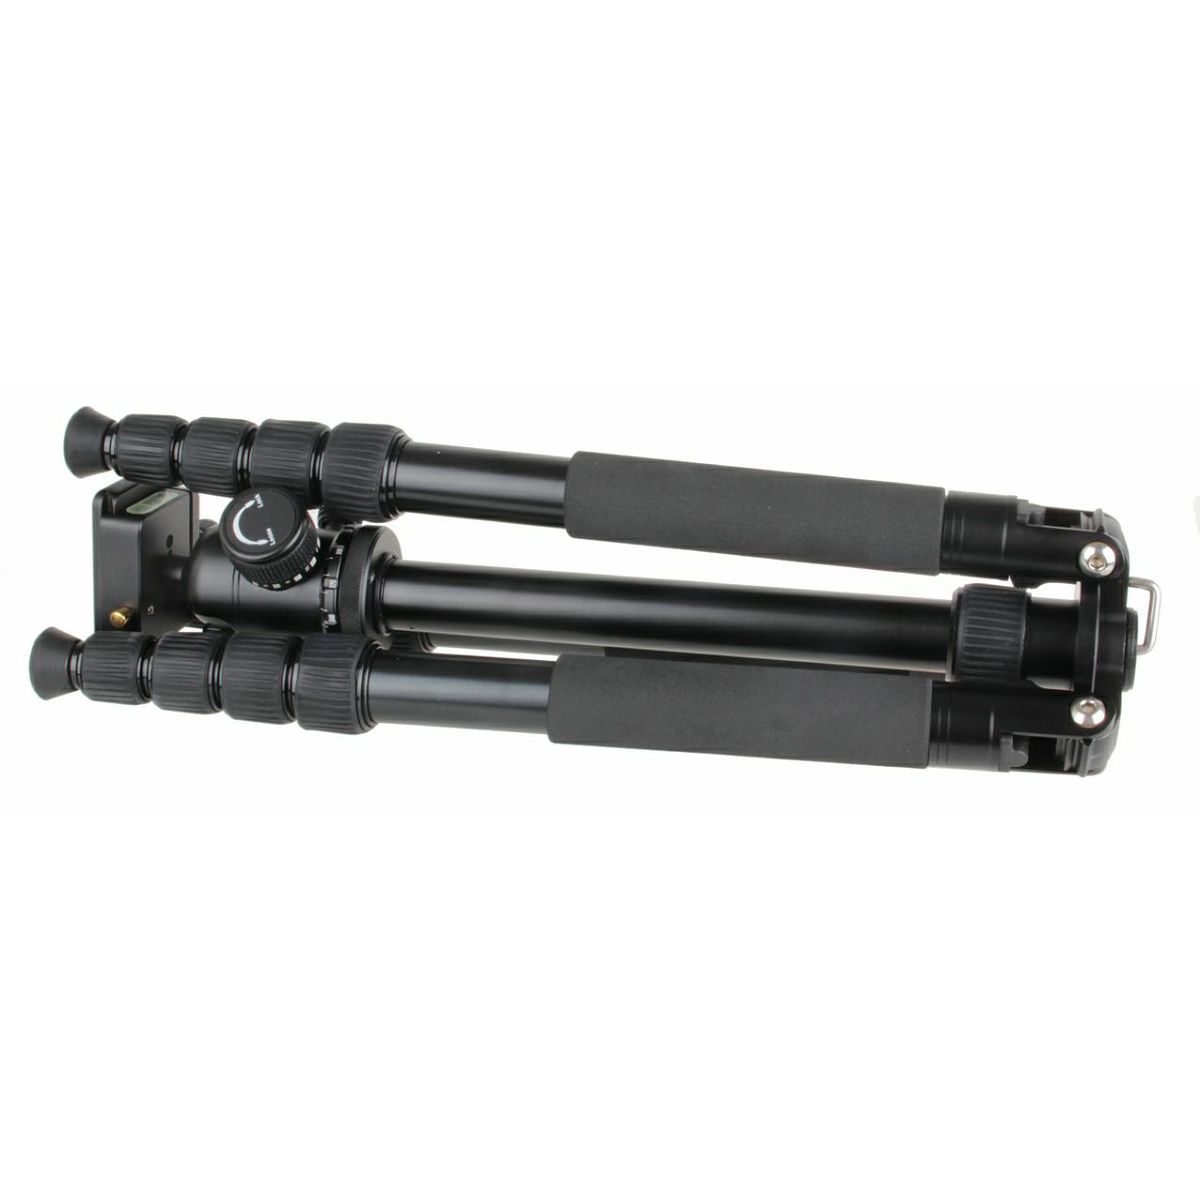 Bilora Coloured Pod CP-1 Black 148cm 6kg schwarz crni aluminijski stativ za fotoaparat alu tripod + ball head kuglasta glava (CP-1)